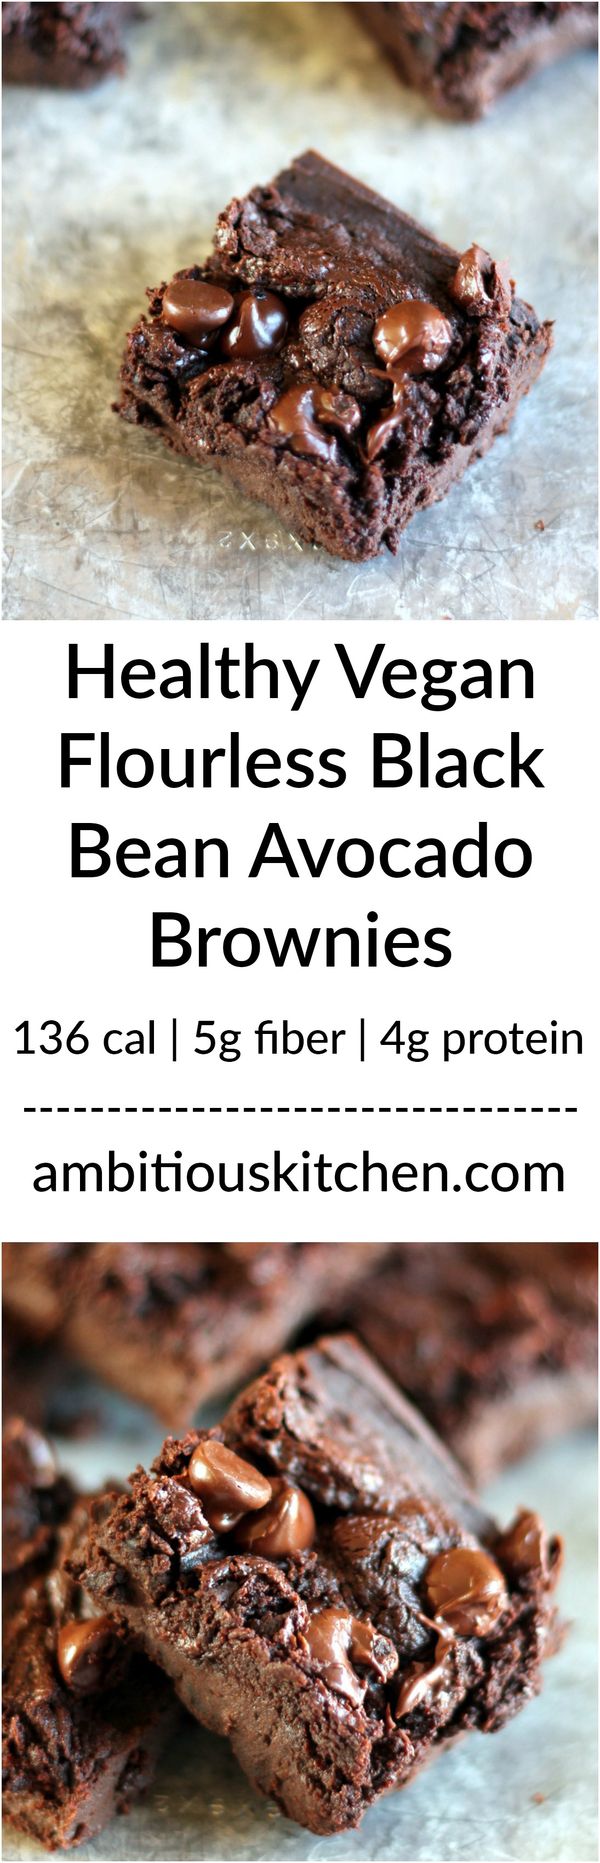 Healthy Flourless Black Bean Avocado Brownies (vegan and gluten free